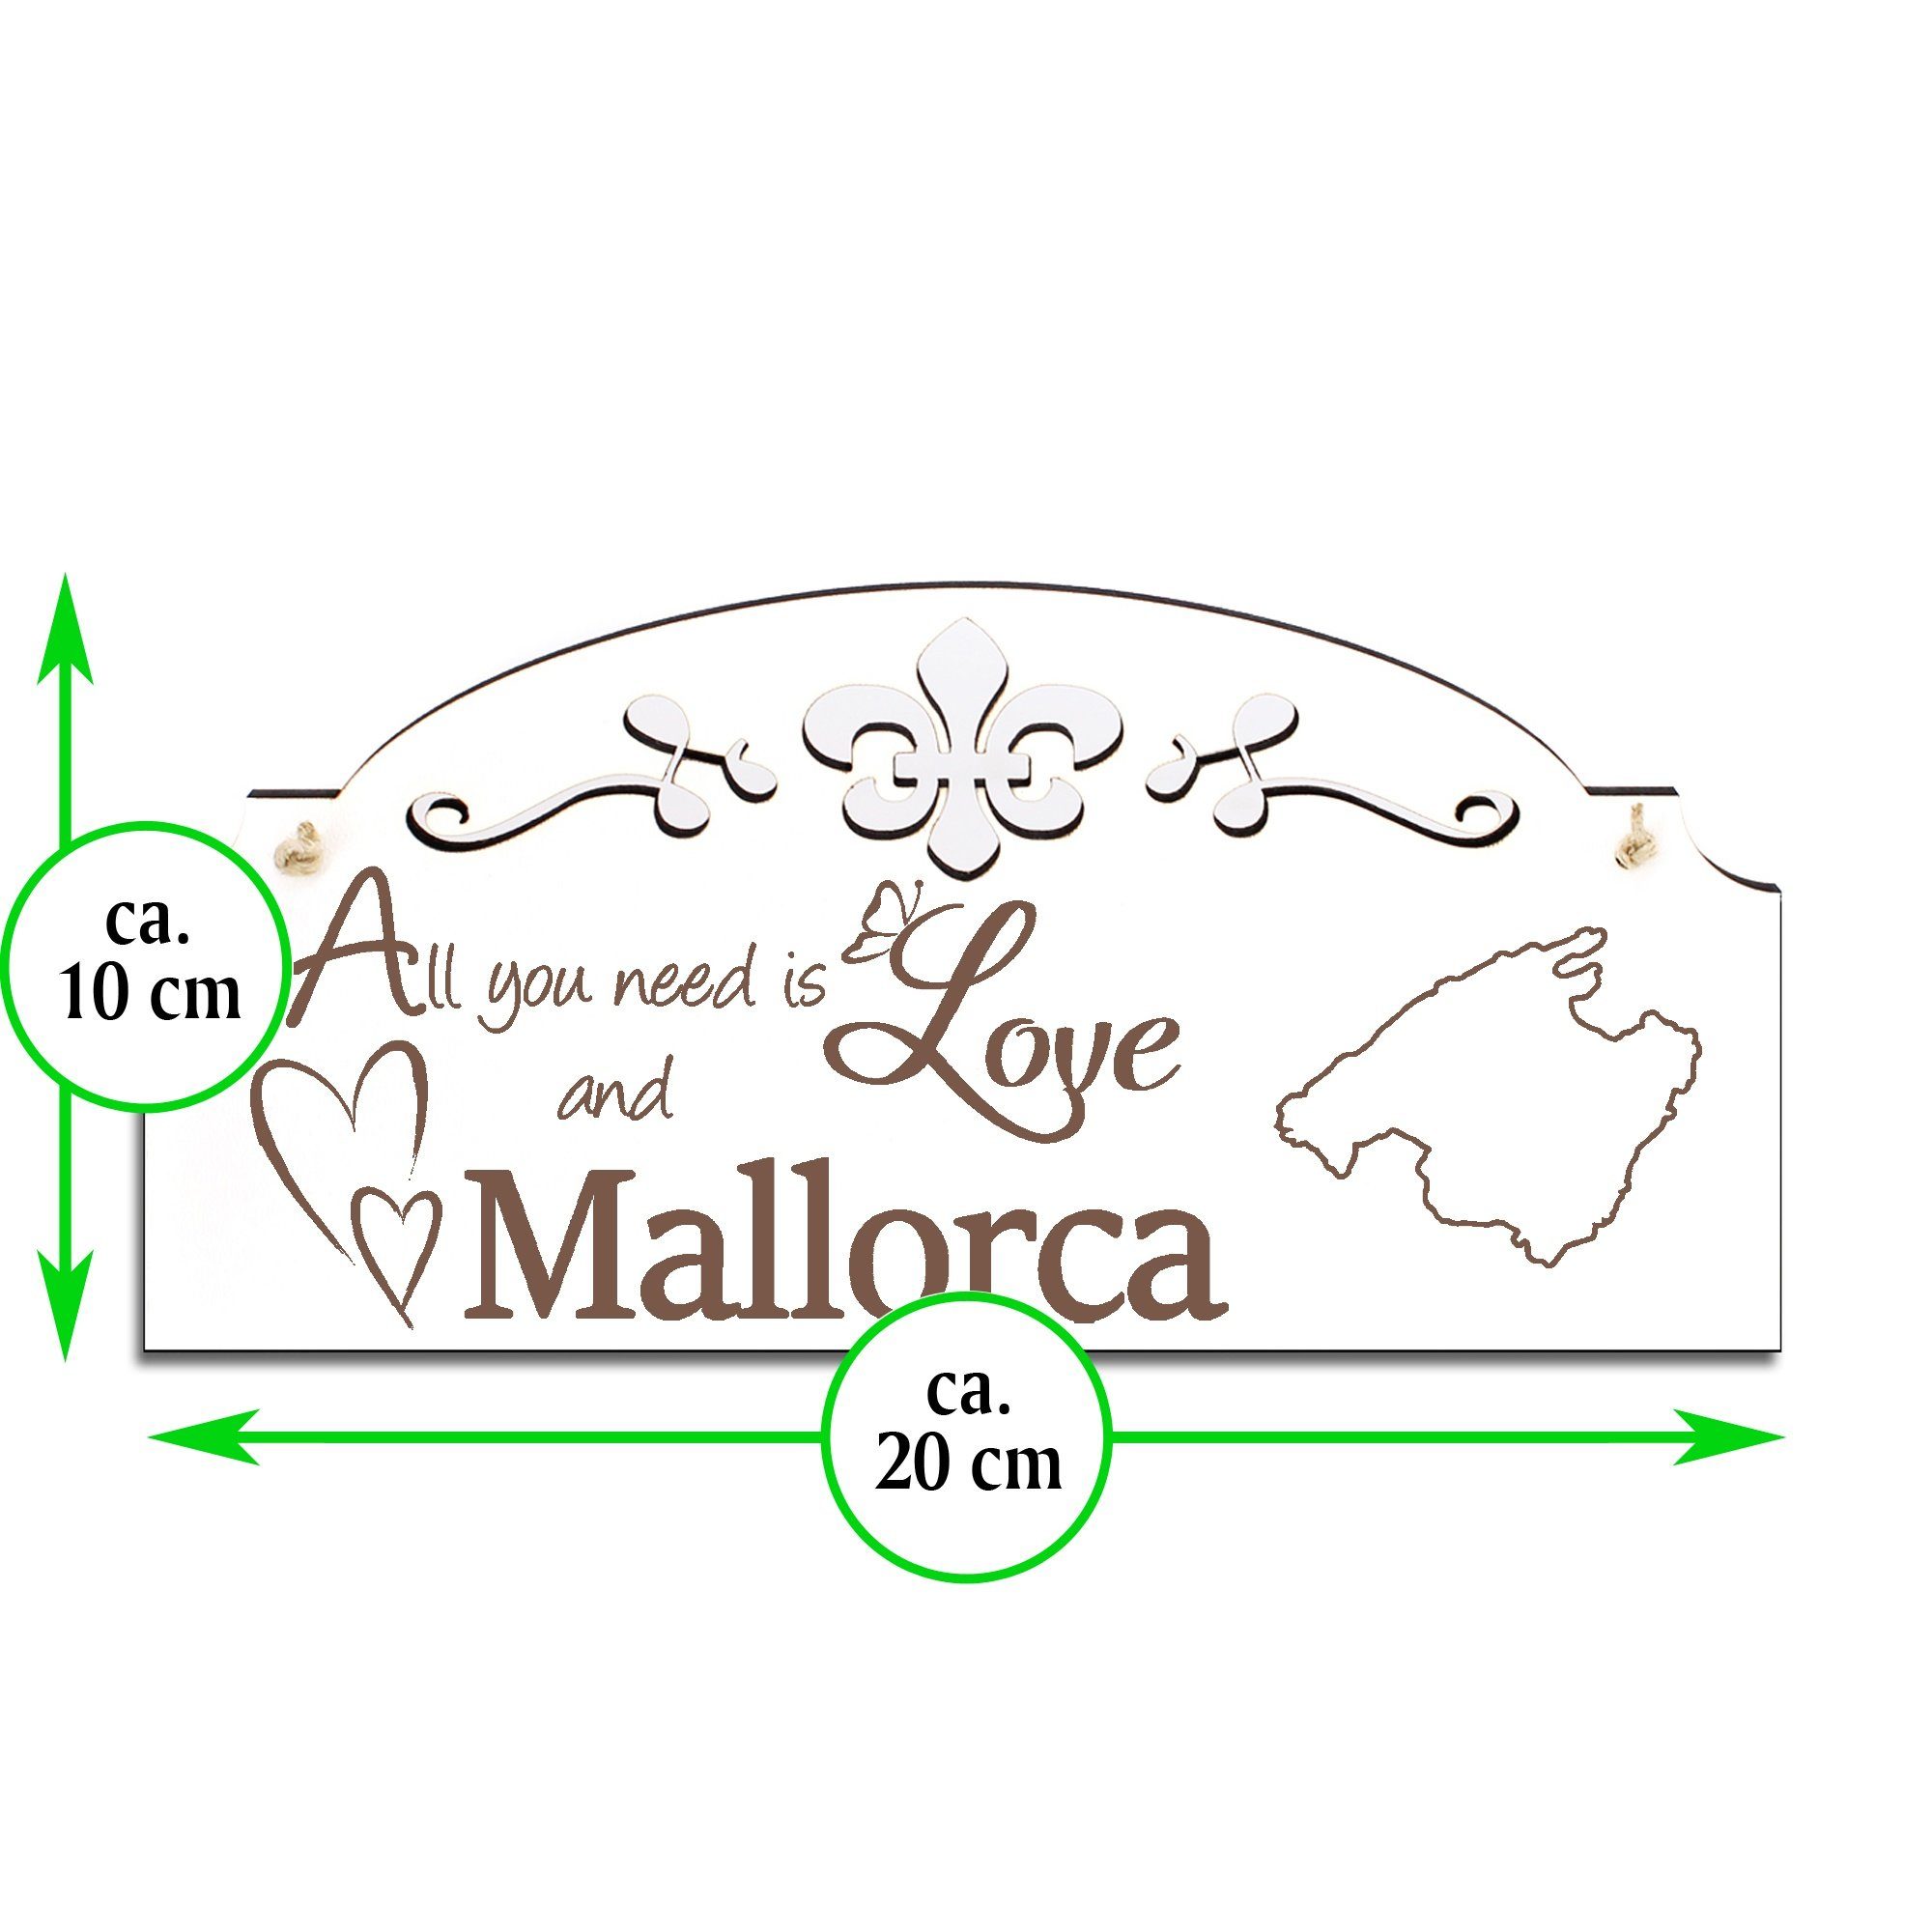 Mallorca Hängedekoration 20x10cm need Dekolando you Love All is Deko Insel